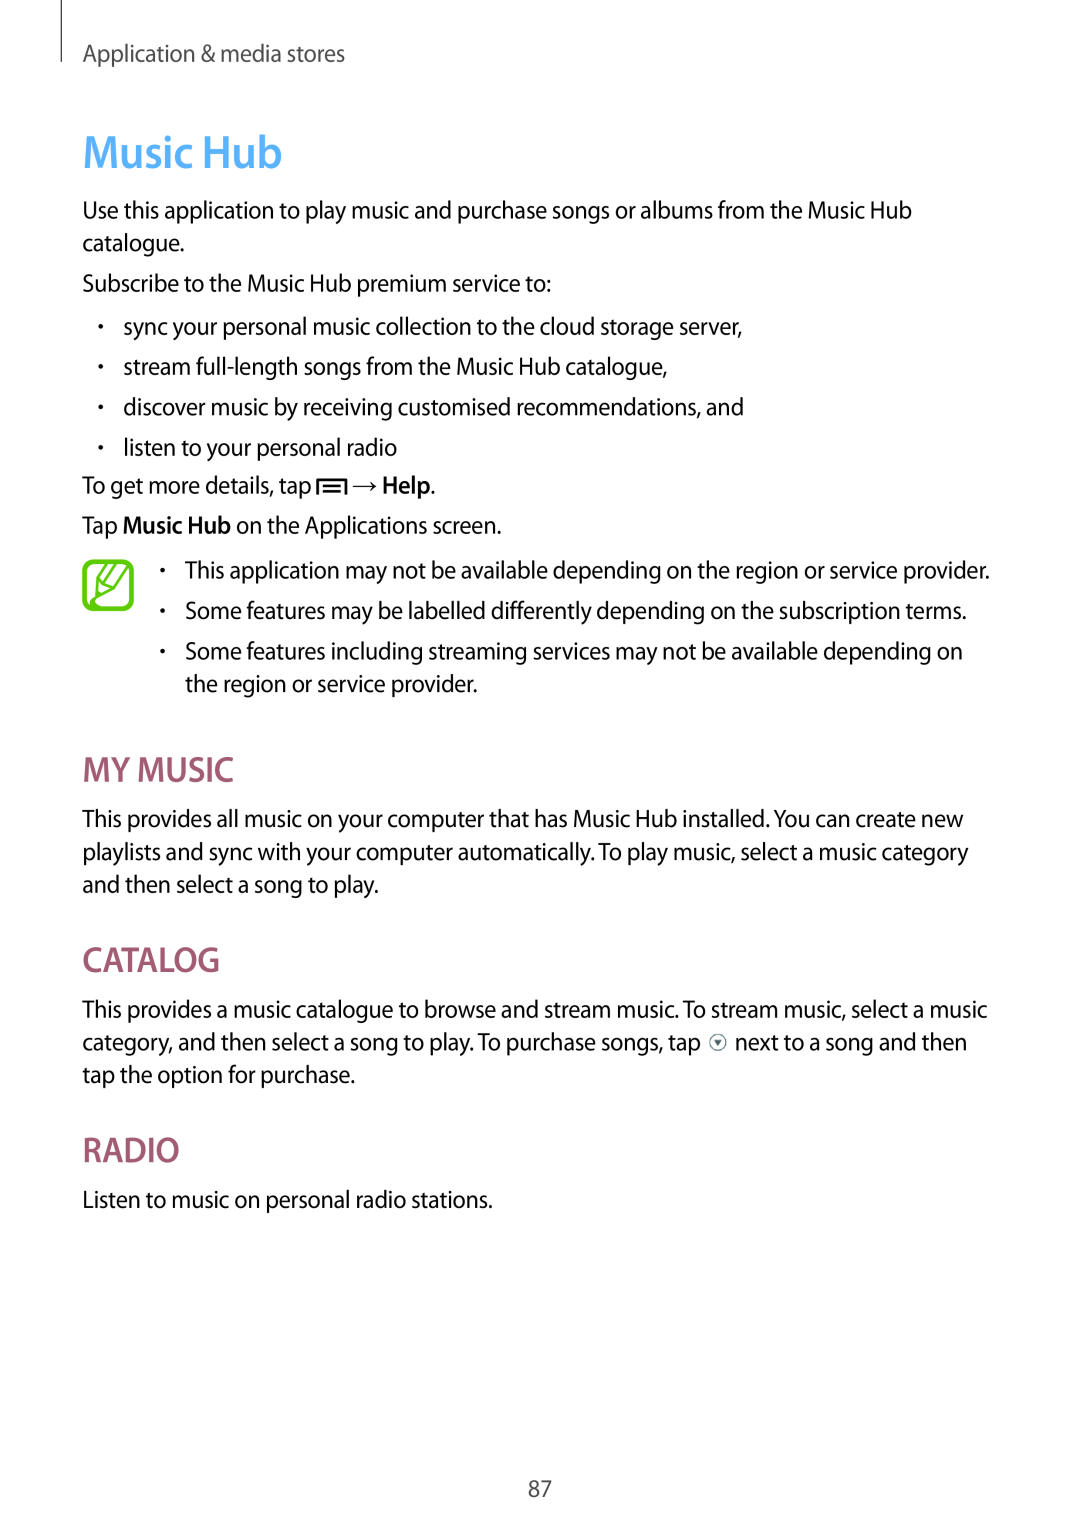 Samsung GT-N5100 user manual Music Hub, My Music, Catalog, Radio, Application & media stores 